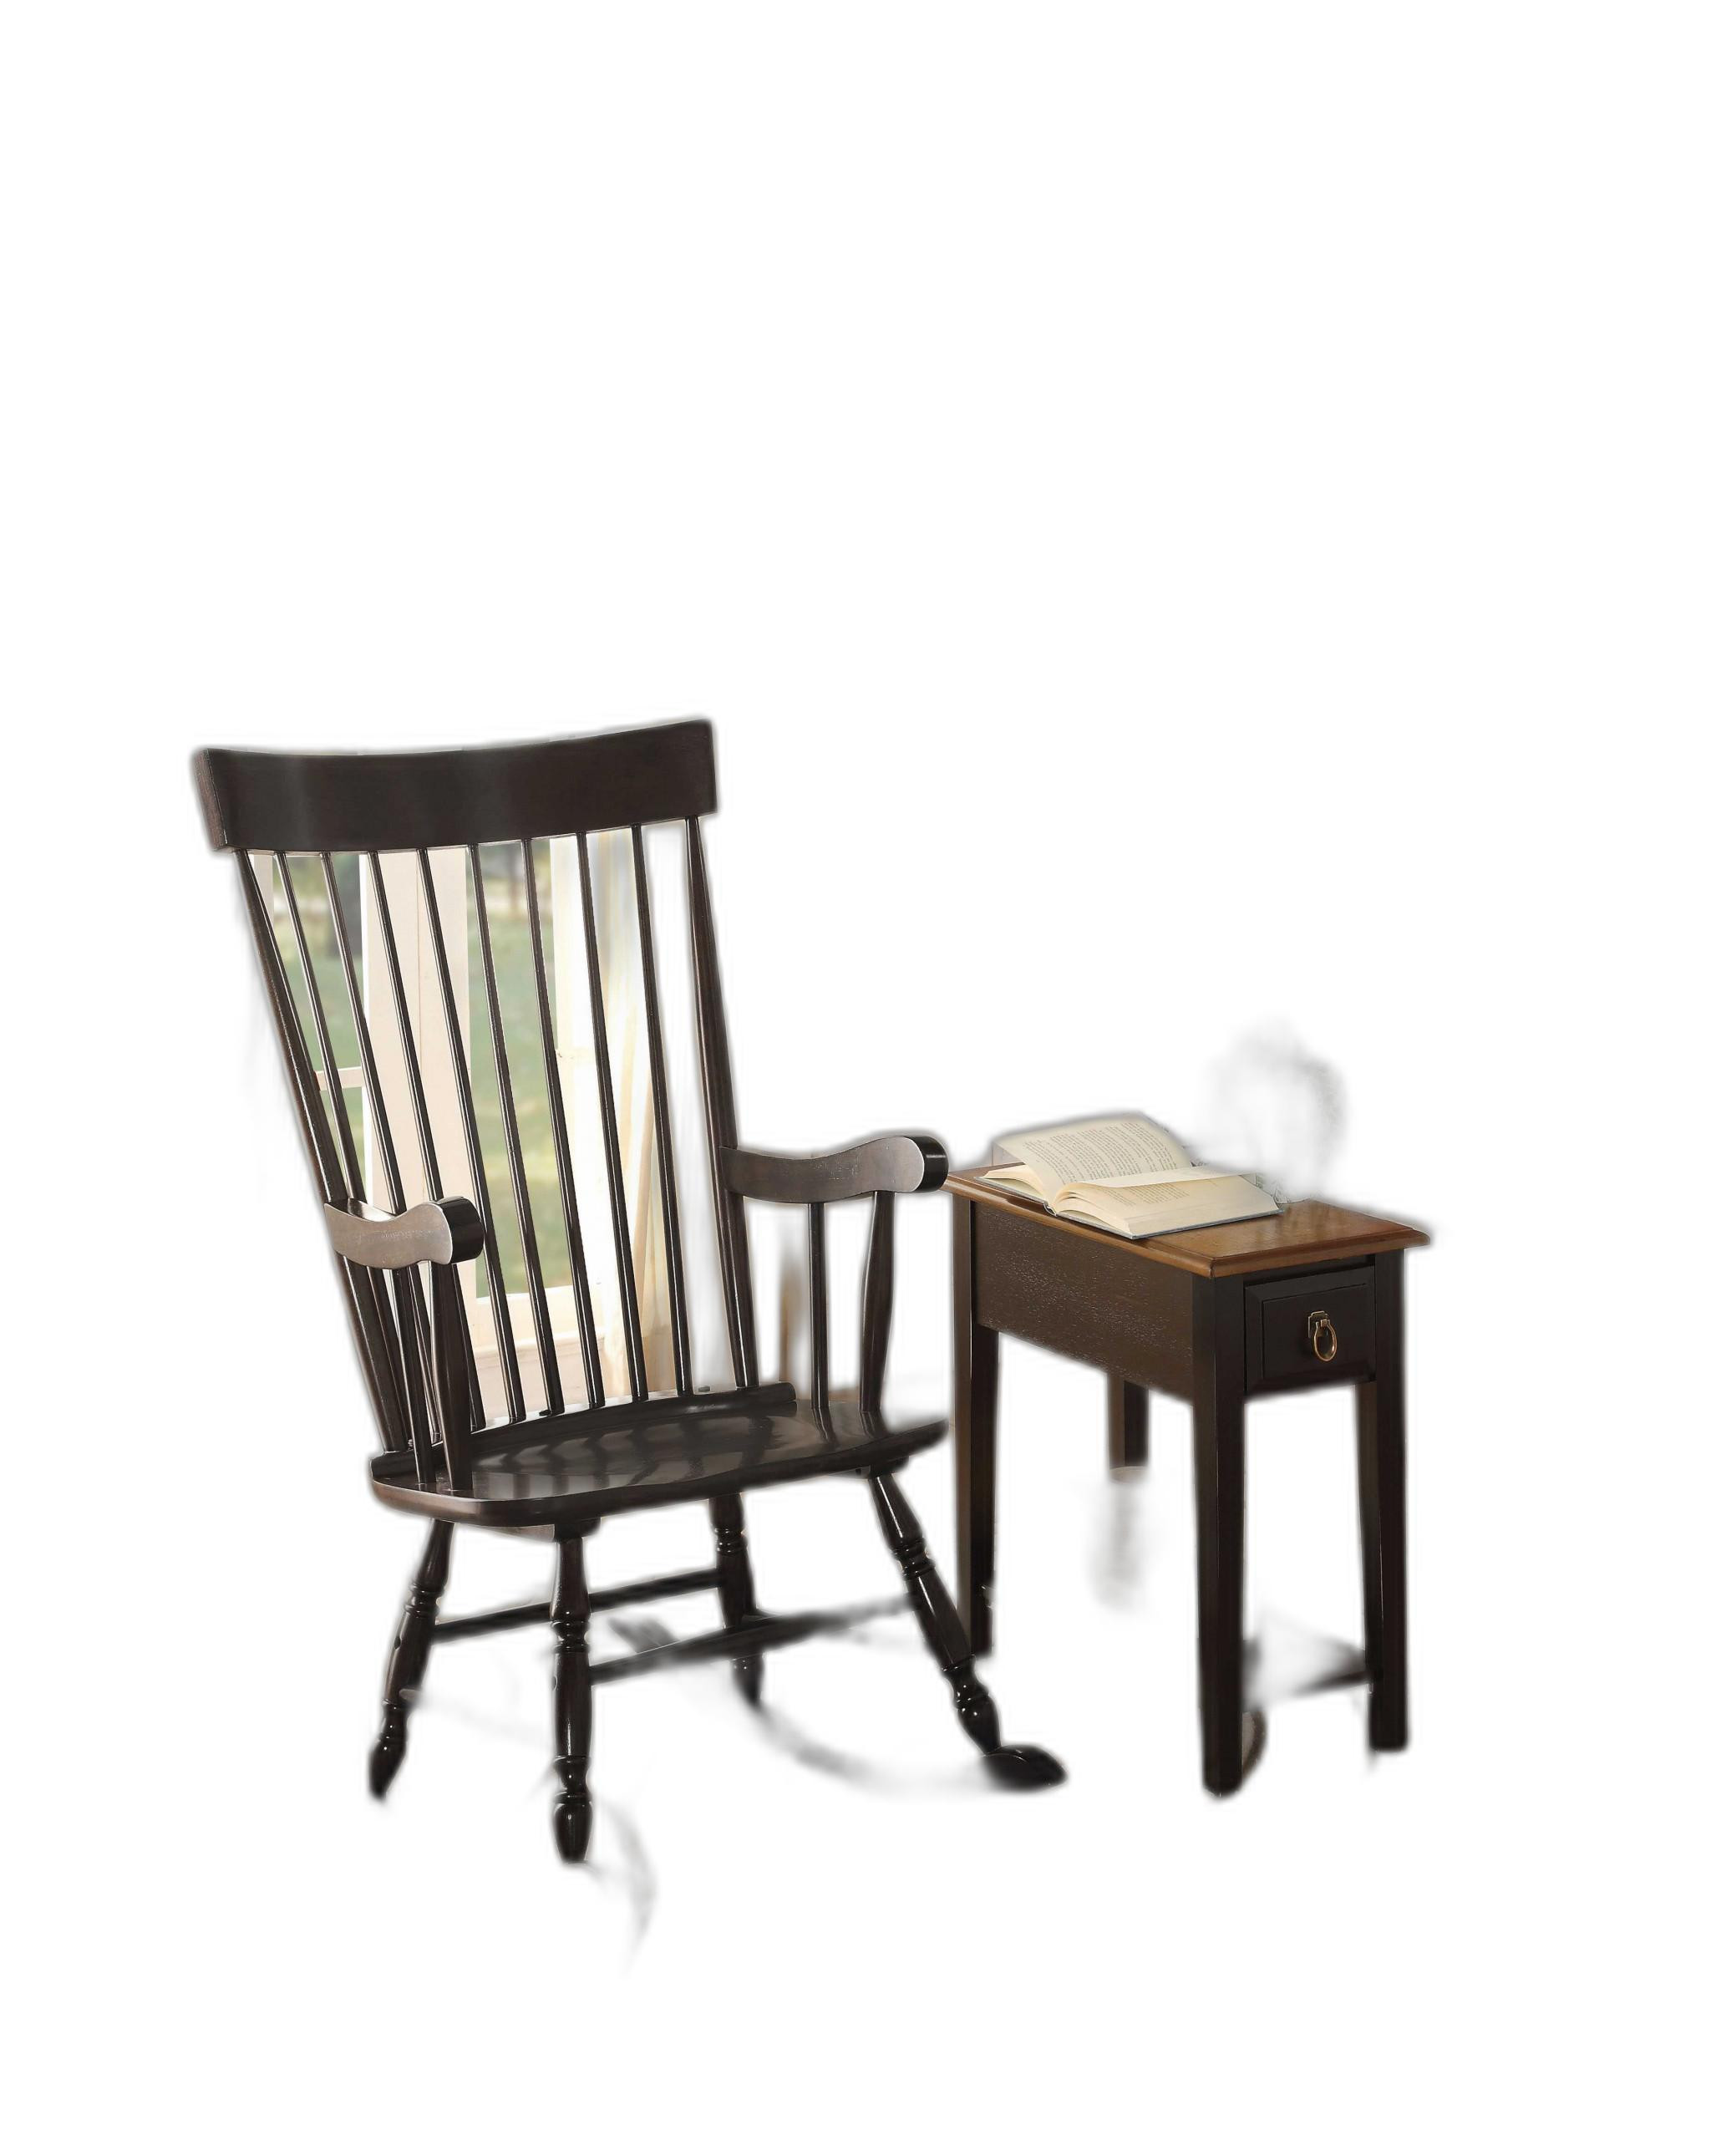 33" X 25" X 45" Black Wood Rocking Chair